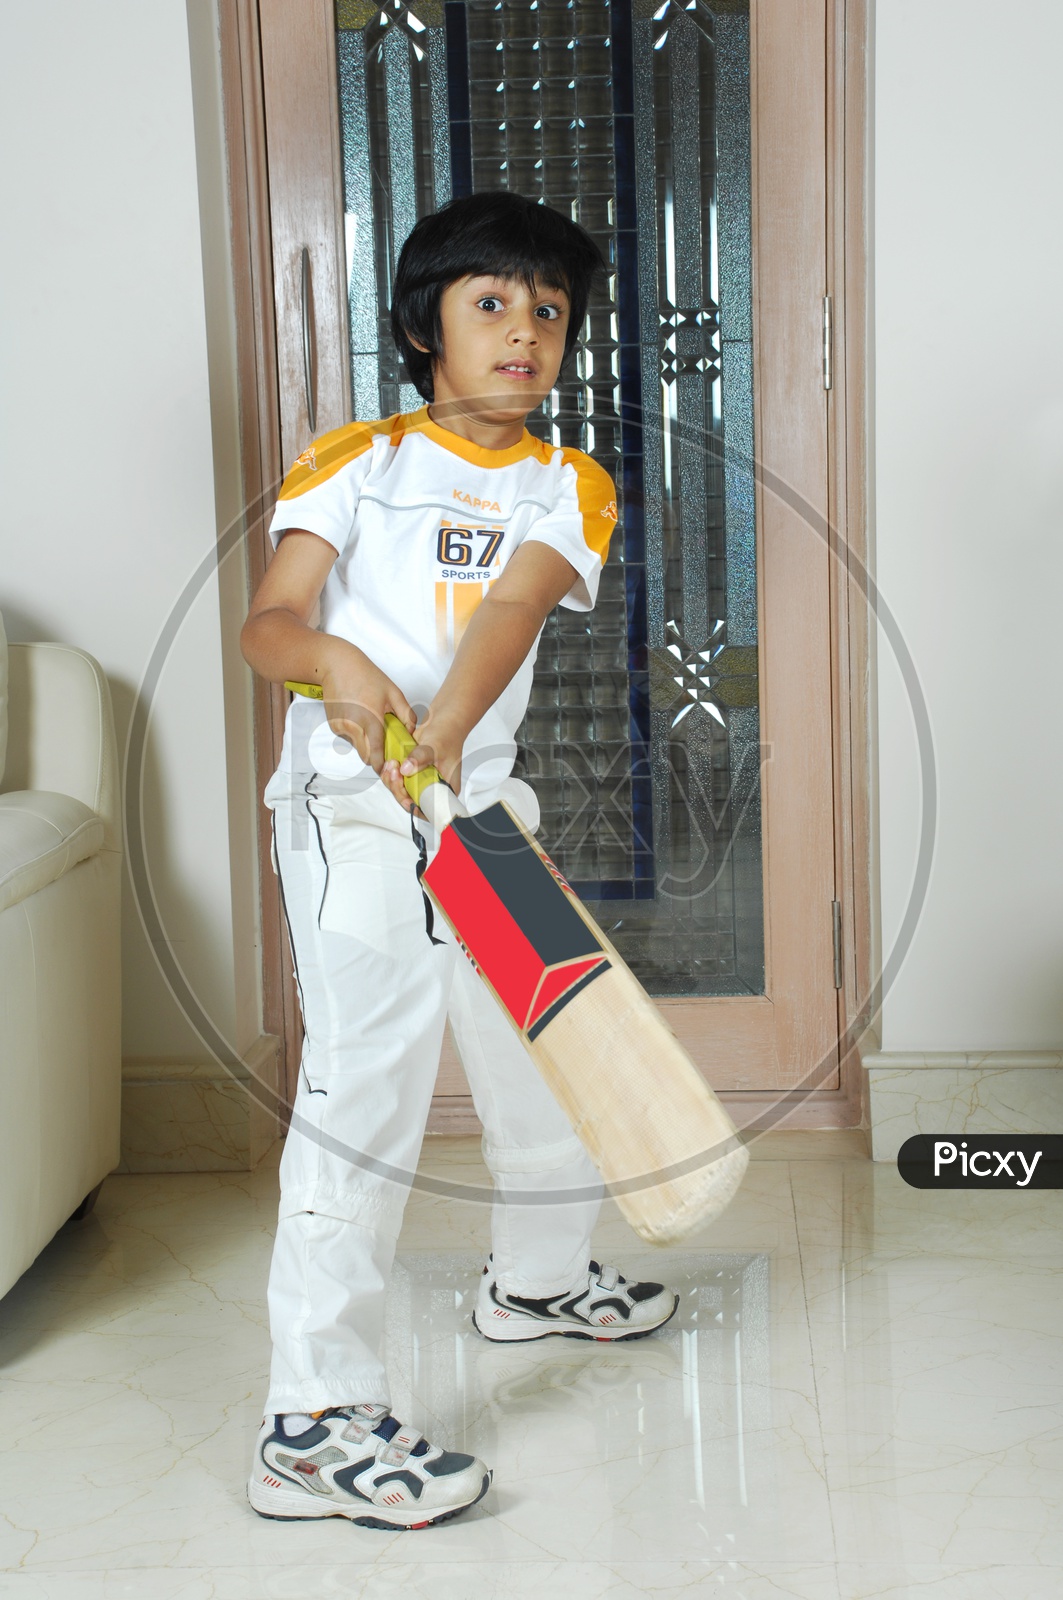 Indian boy holding a cricket bat